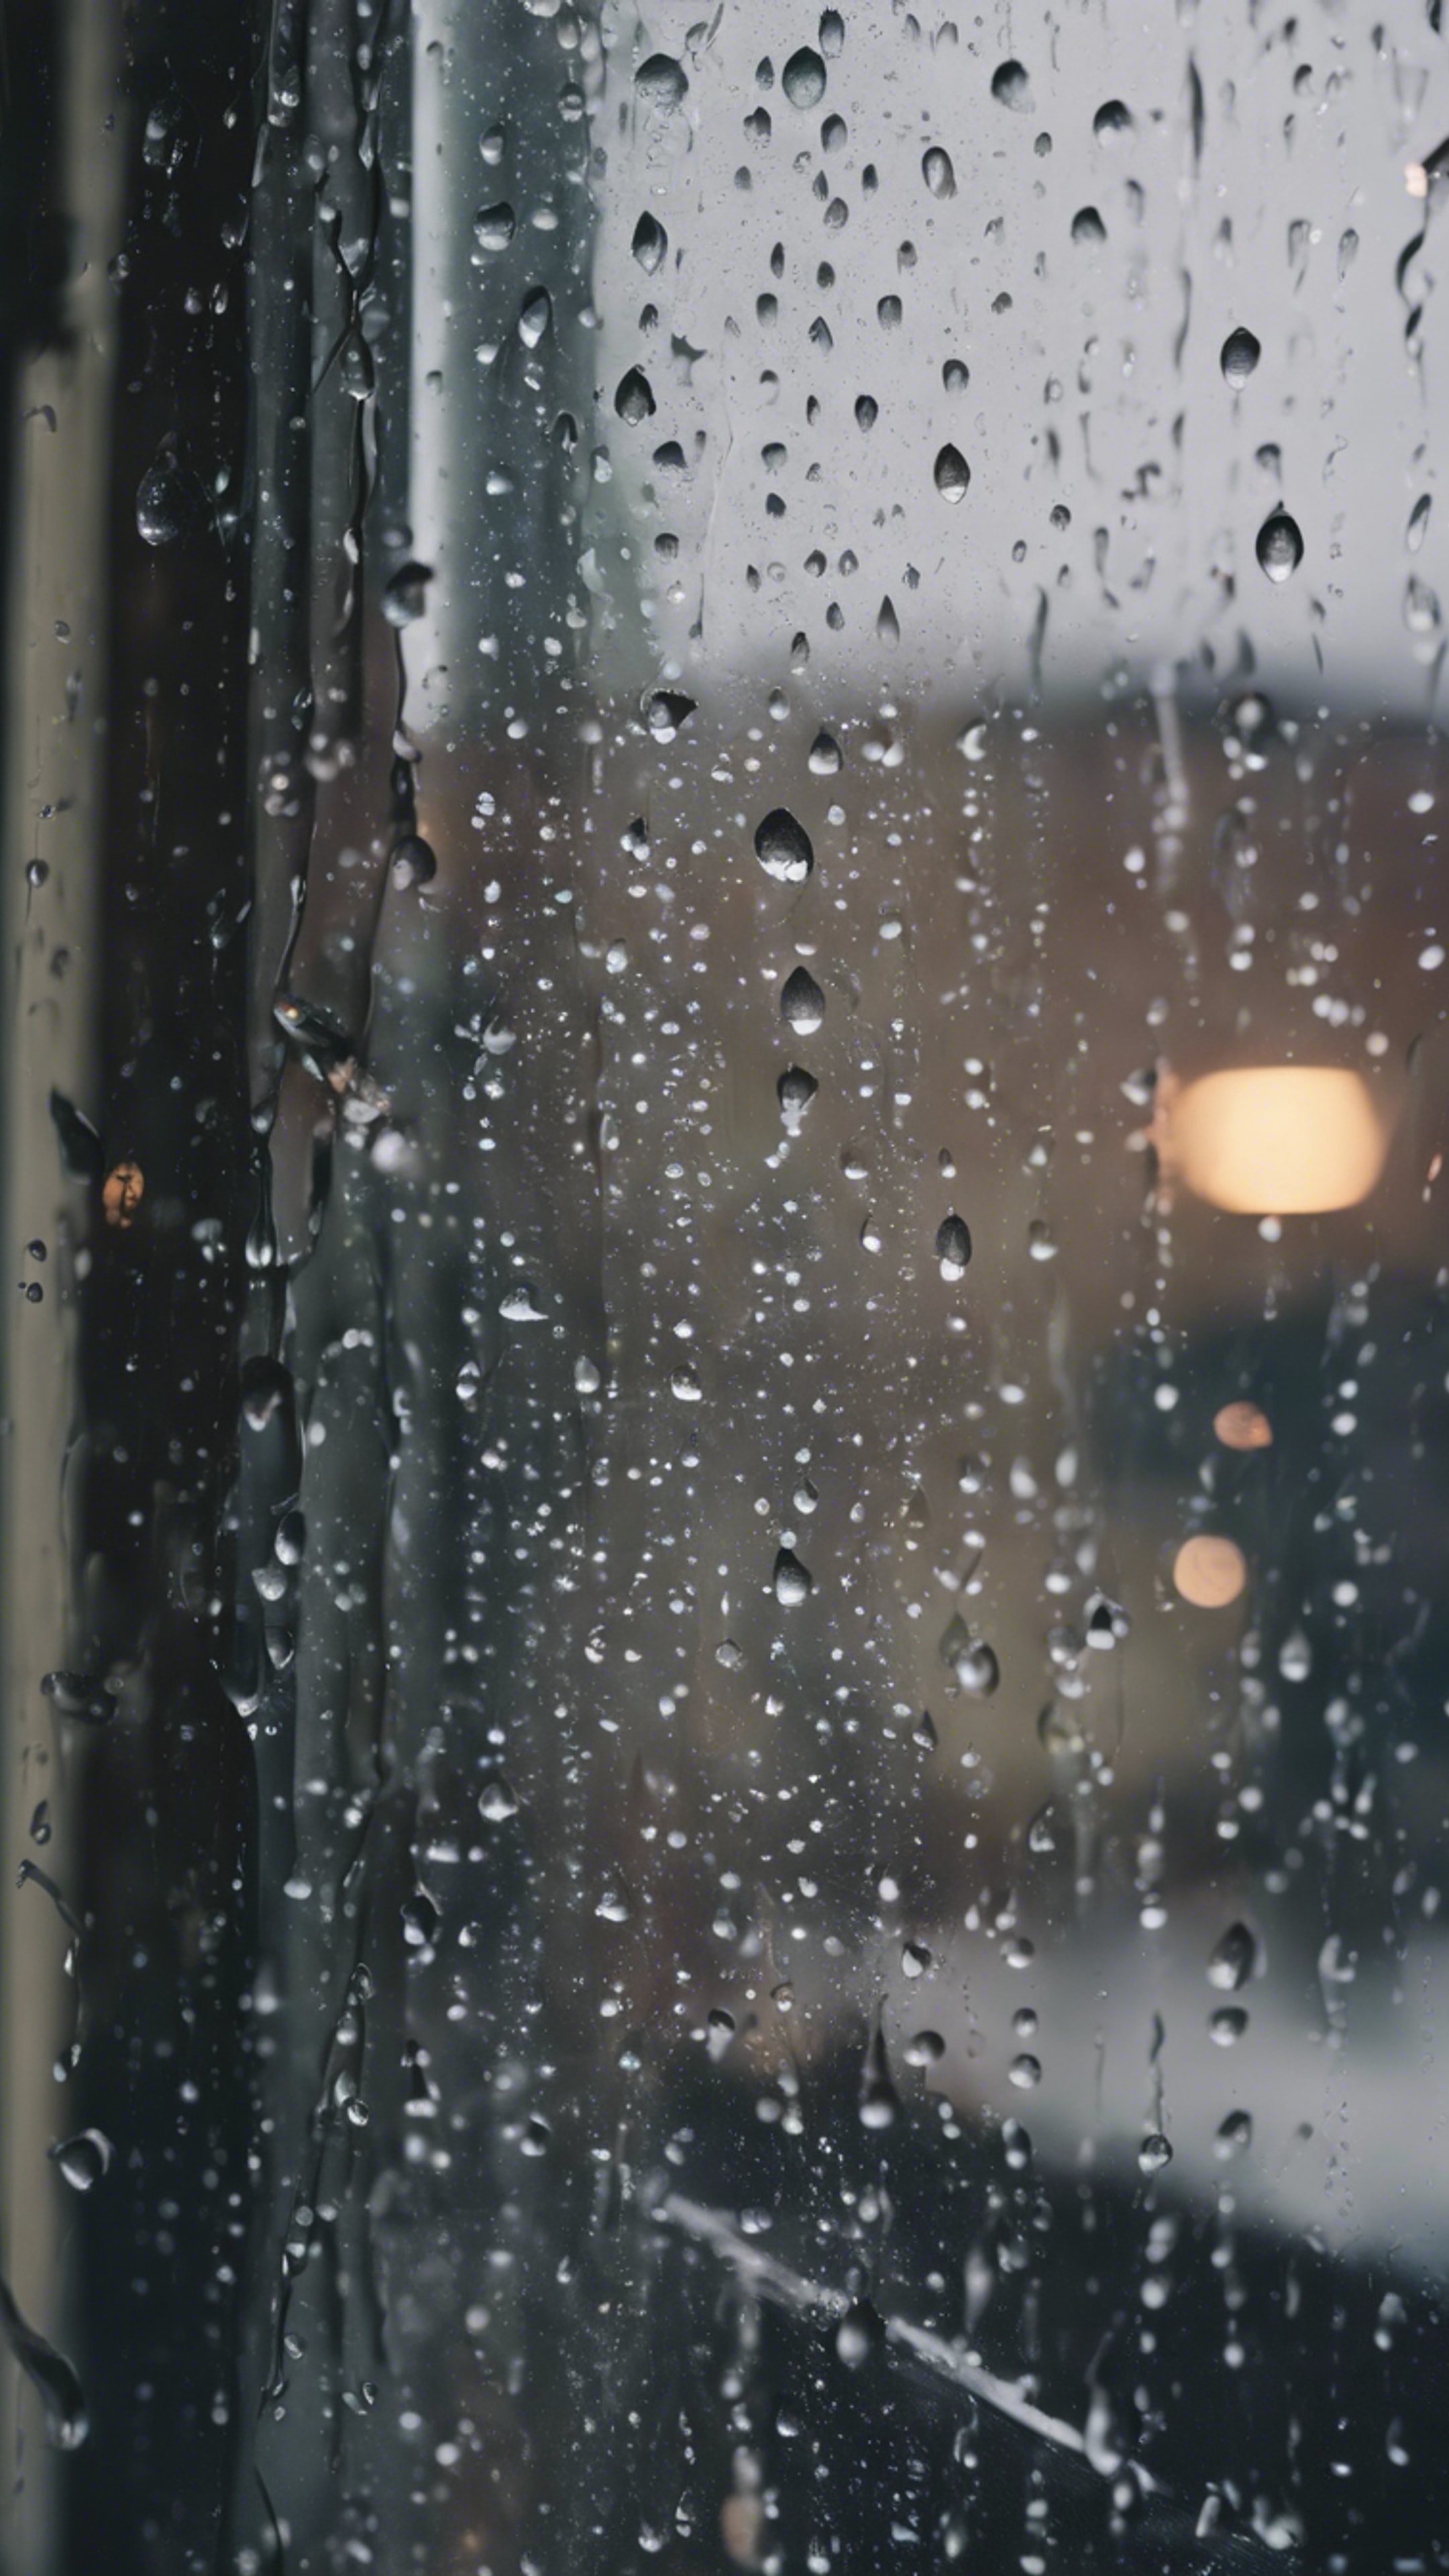 A heavy rainstorm viewed through a window, the droplets streaking down the glass Tapet[548369da7c5b4ee9bdb0]